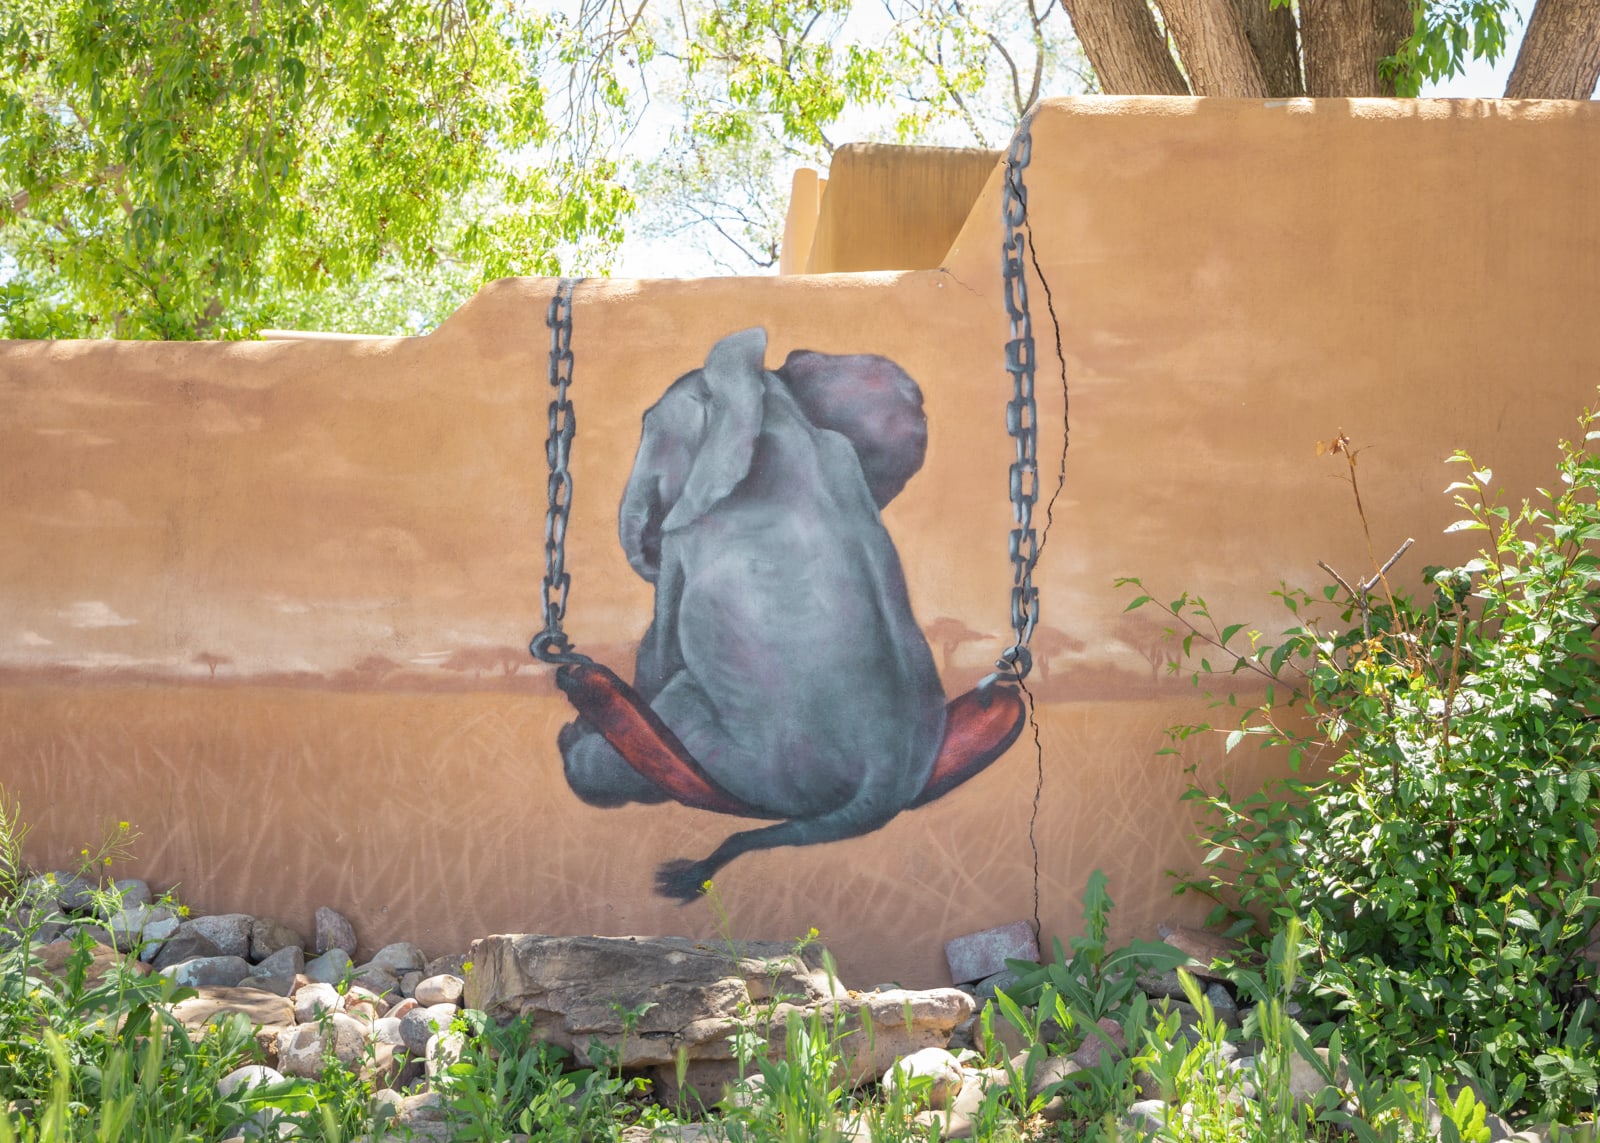 A mural of an elephant on a swing in Santa Fe